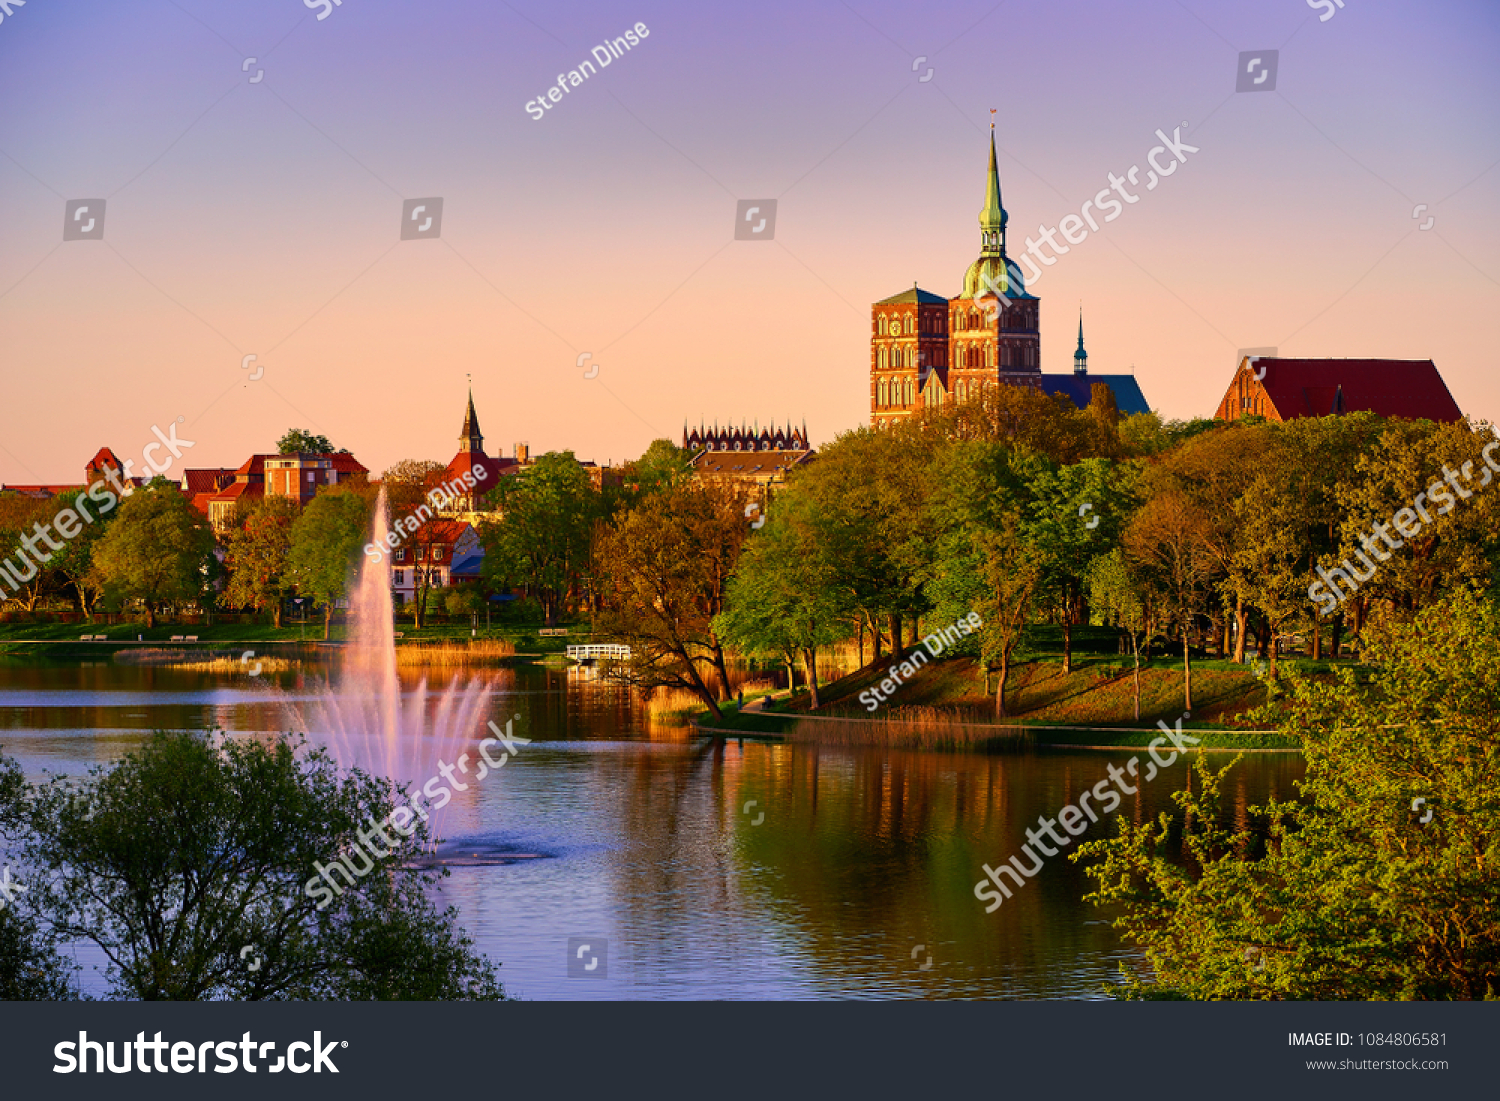 evening scene with skyline of historic Stralsund #1084806581